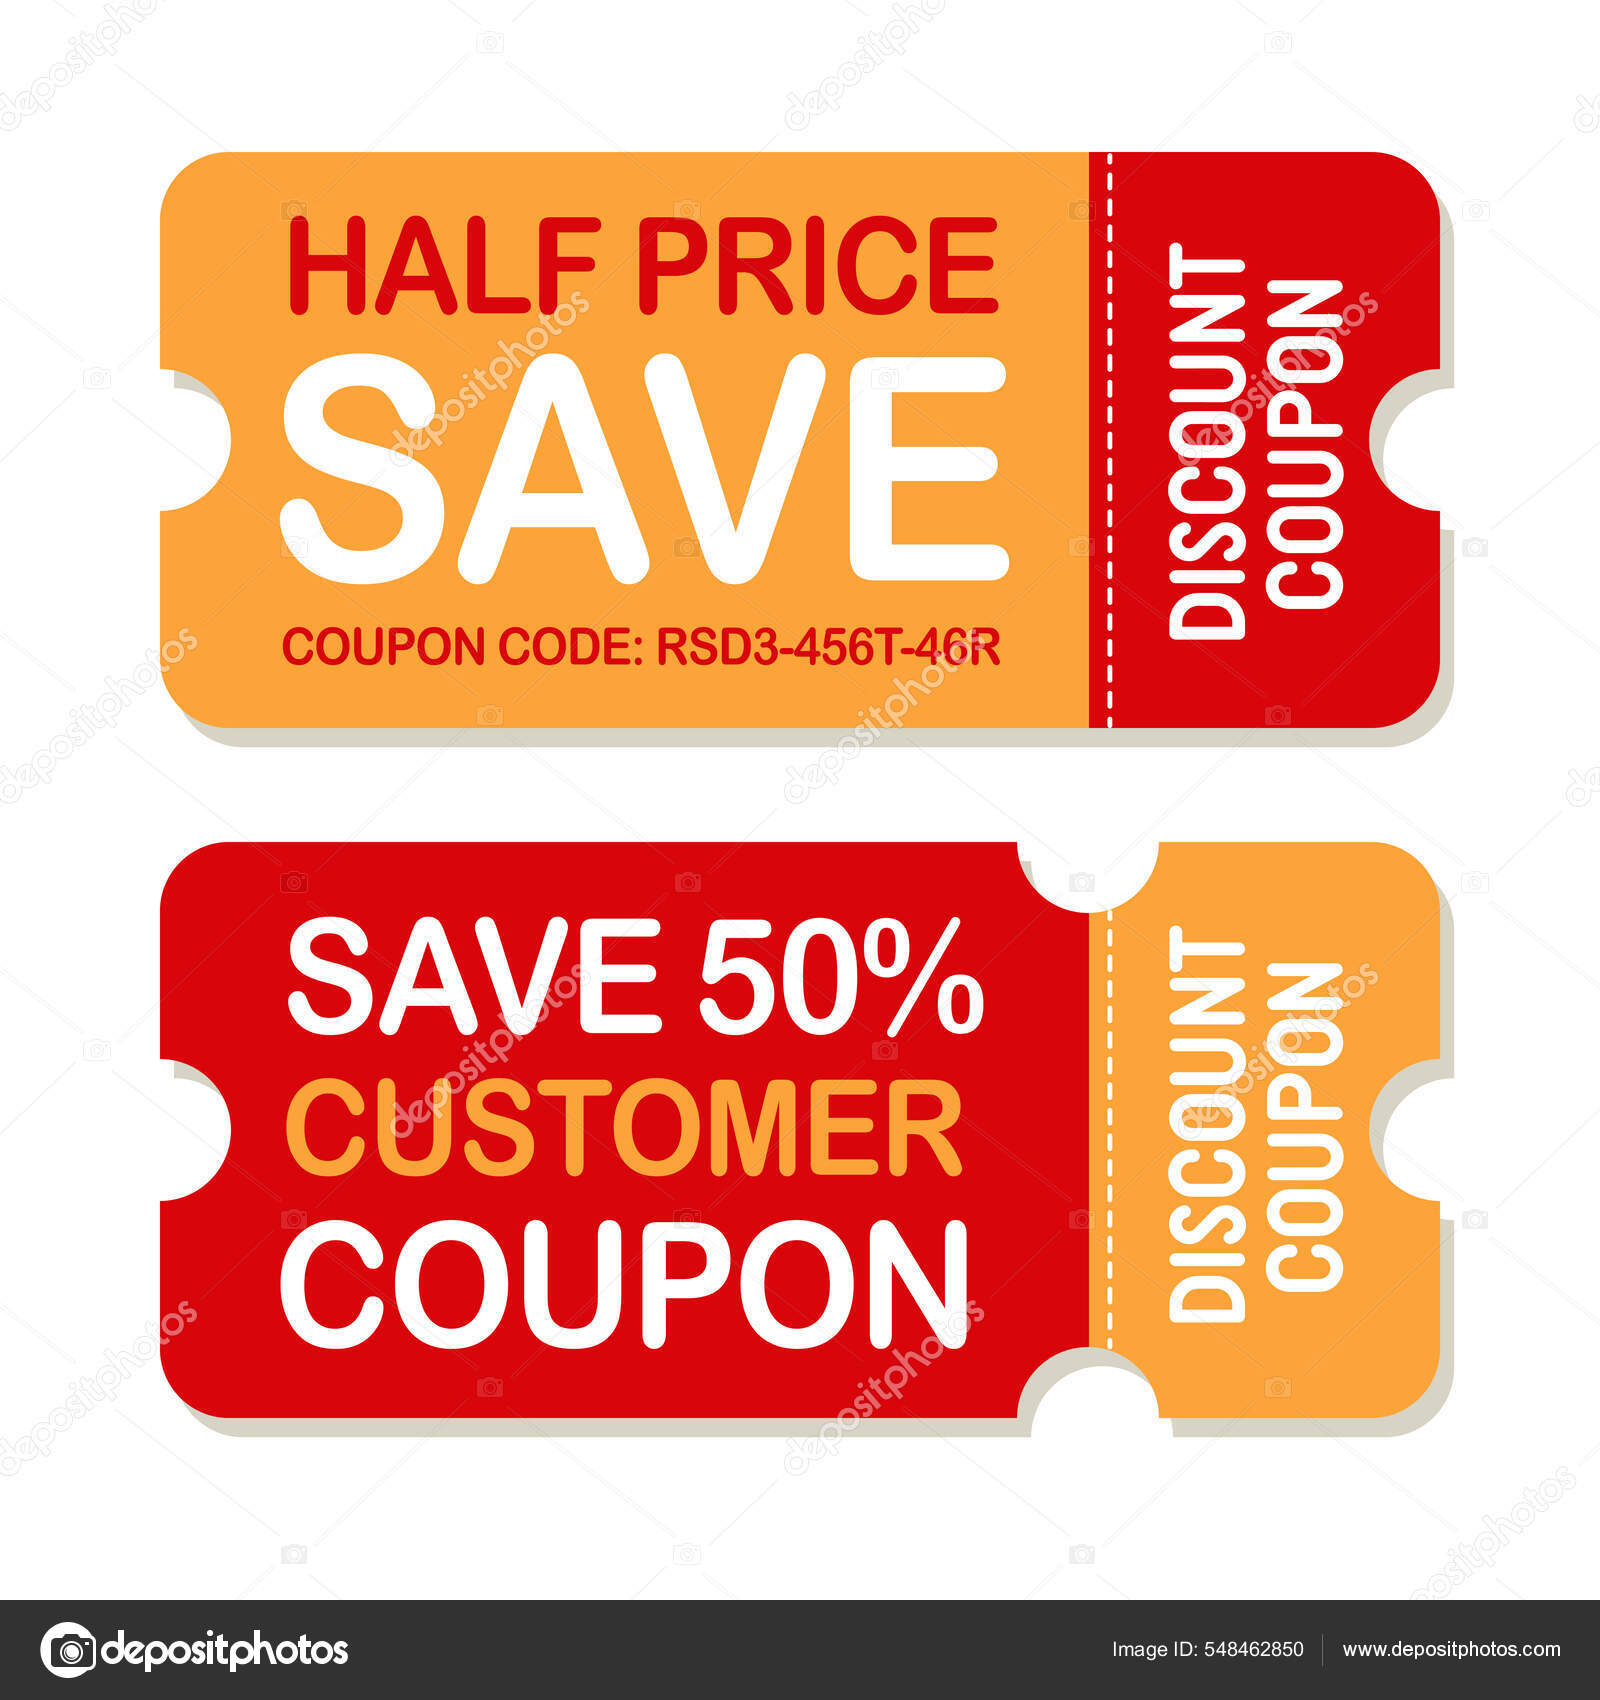 https://st.depositphotos.com/50093254/54846/v/1600/depositphotos_548462850-stock-illustration-discount-coupon-half-price-offer.jpg